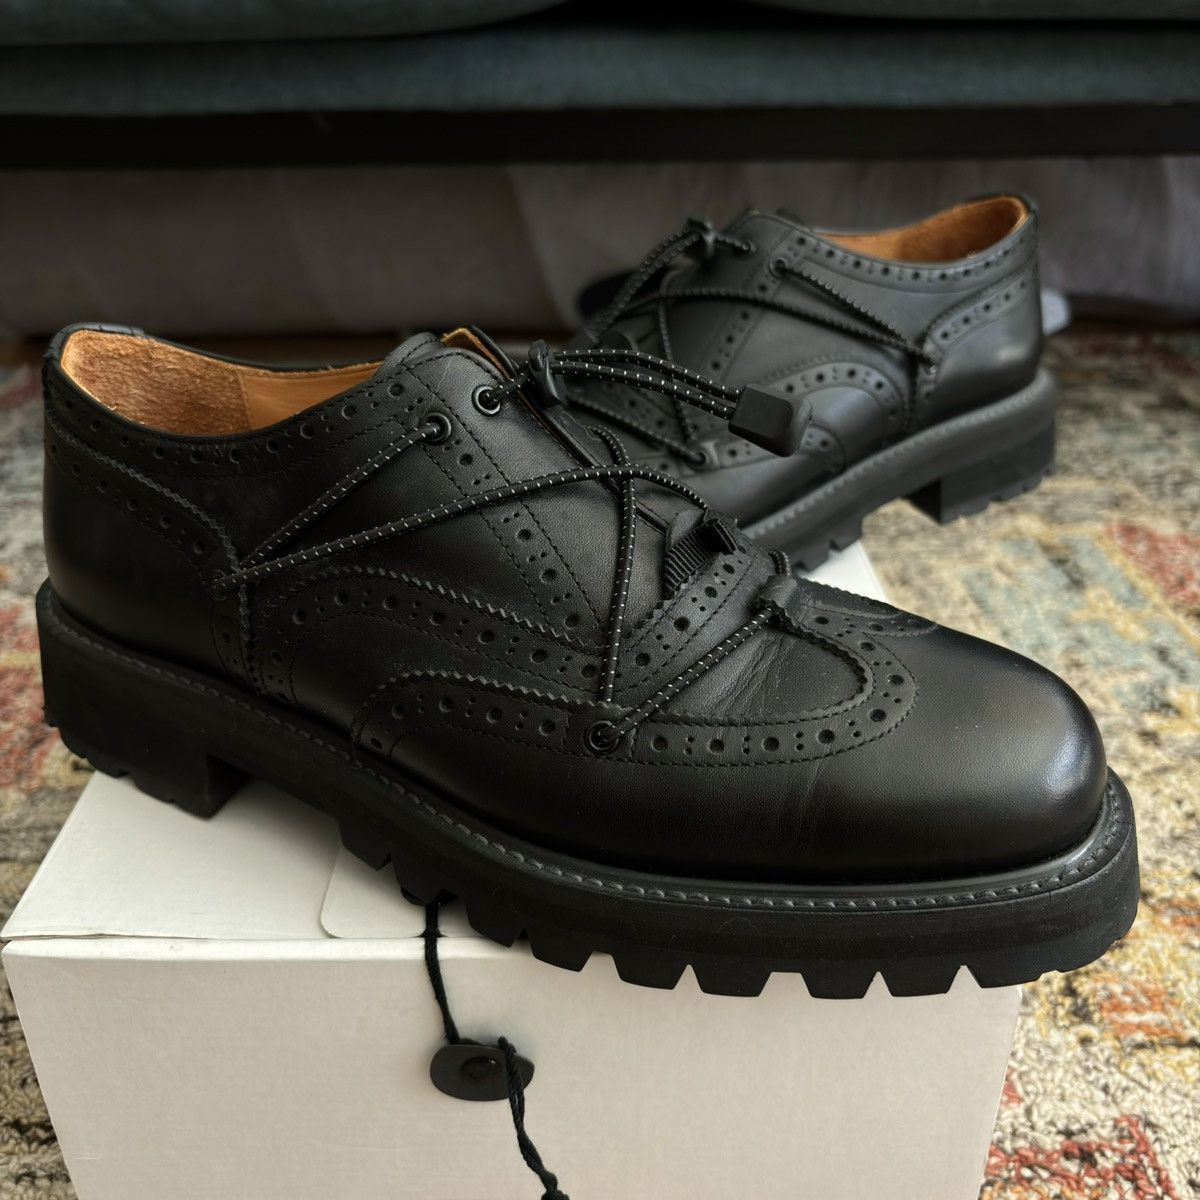 Hender Scheme Code Tip Smooth Leather Brogues Vibram Japan dress shoes |  Grailed